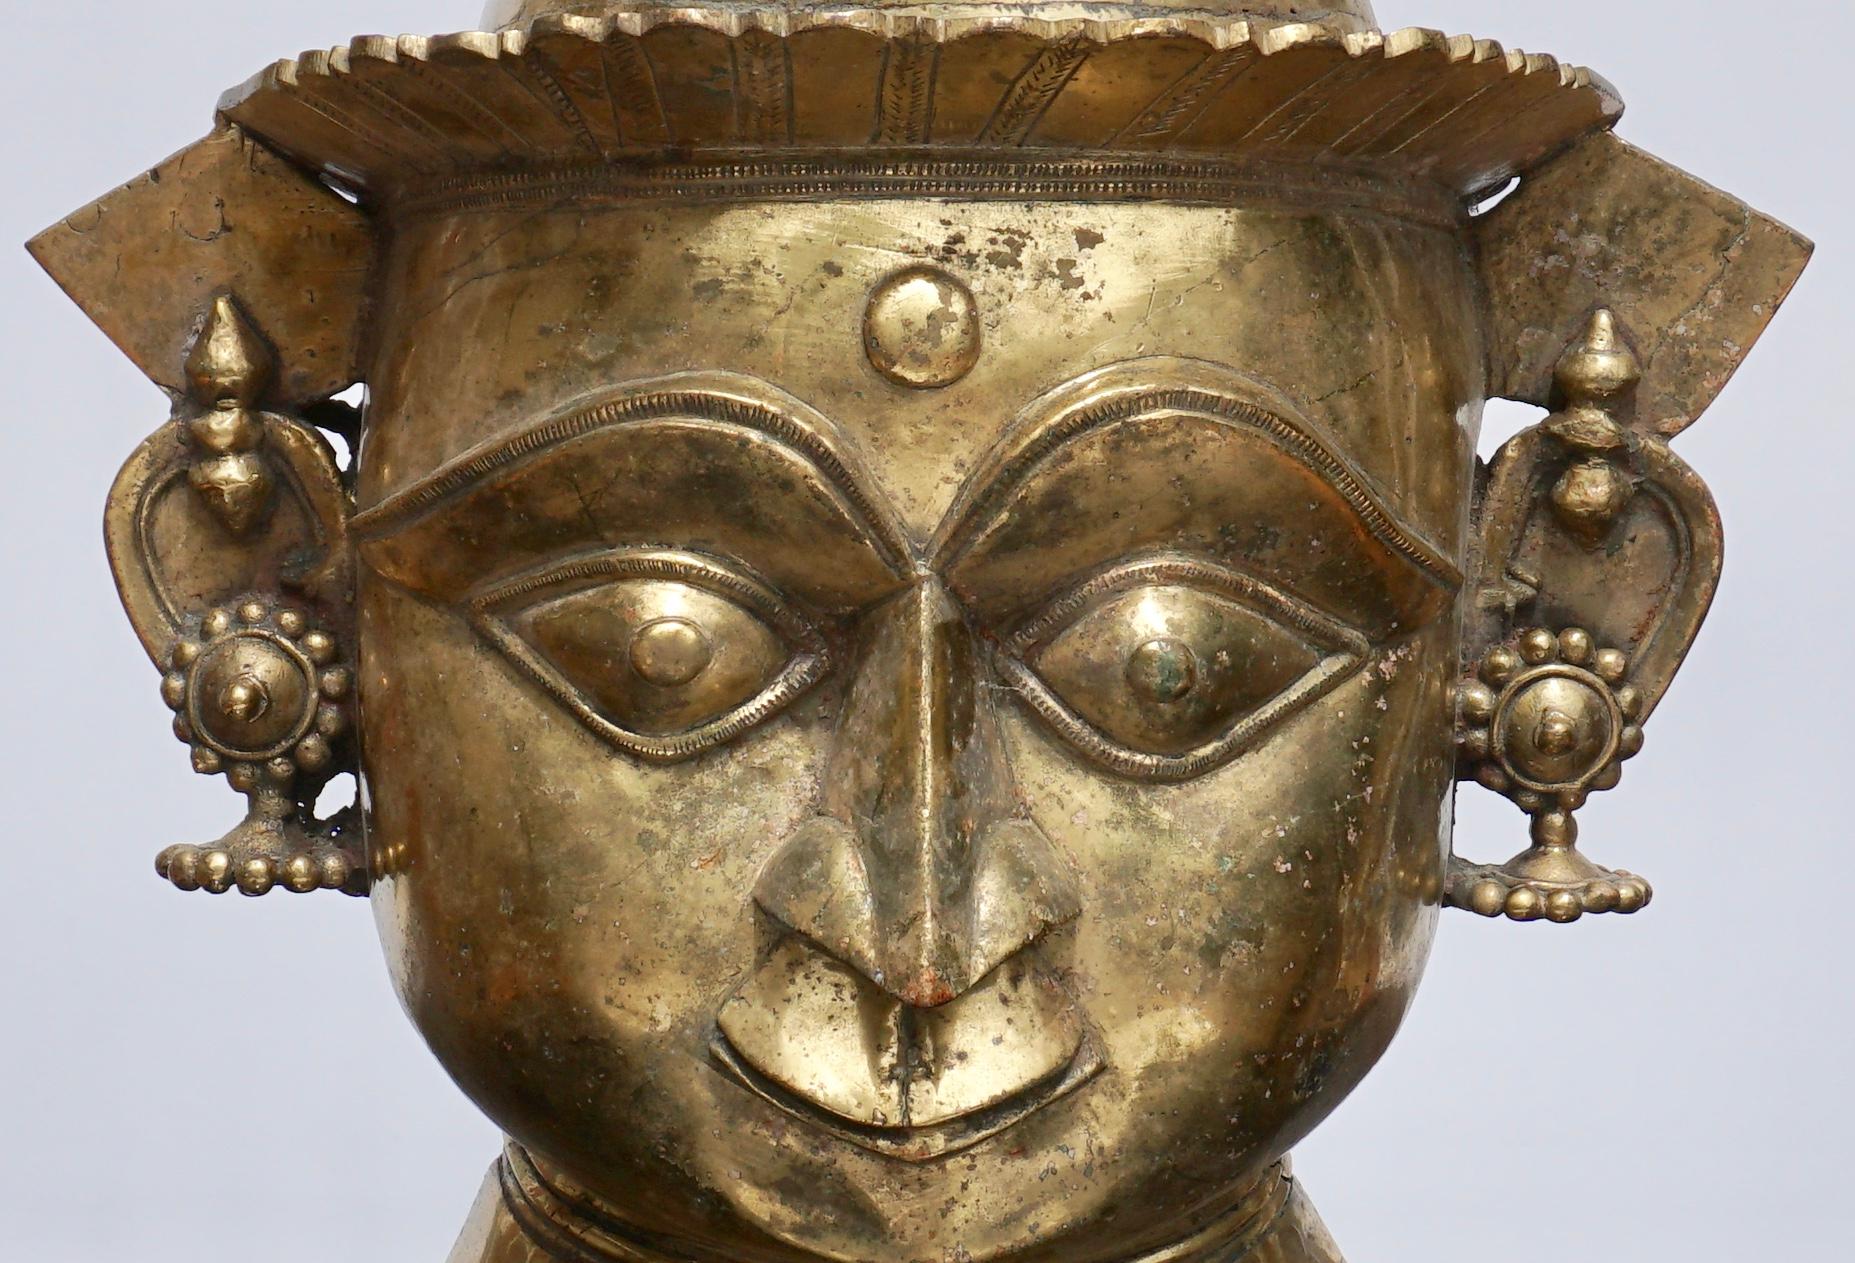 A Indian Mukhalingam Mukha face Lingum mask.

large and decorative gilt bronze Shiva facial representation of a Hindu God for phalic Lingums. A rare ritual artistic artifact.

Dimensions: 18.25 x 12.5 x 5.5 inches (46.4 x 31.8 x 14.0 cm)

Condition: